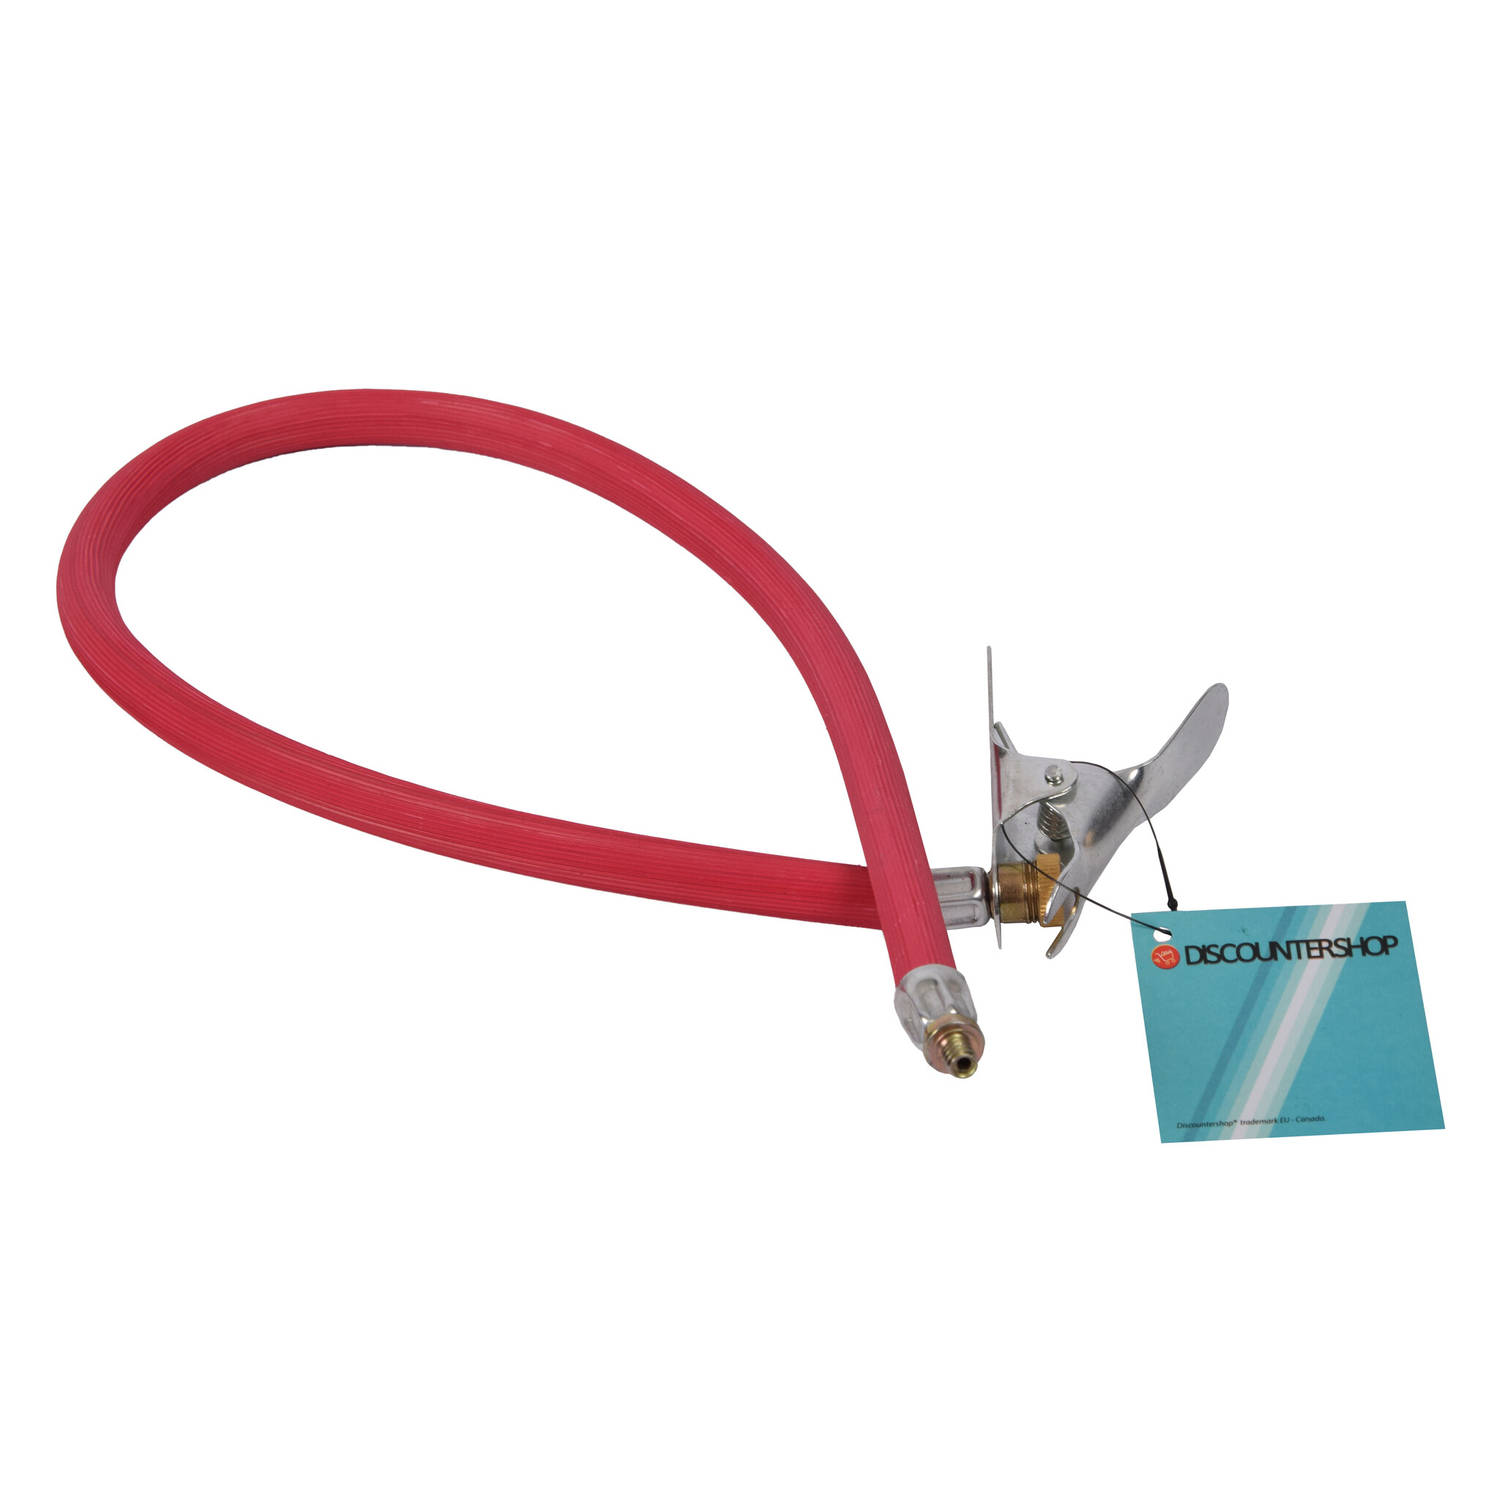 Fietspompslangen Universeel 60cm Fietsband Oppompen Met Schroefverbinding Rode Knijpklem Fietspompen